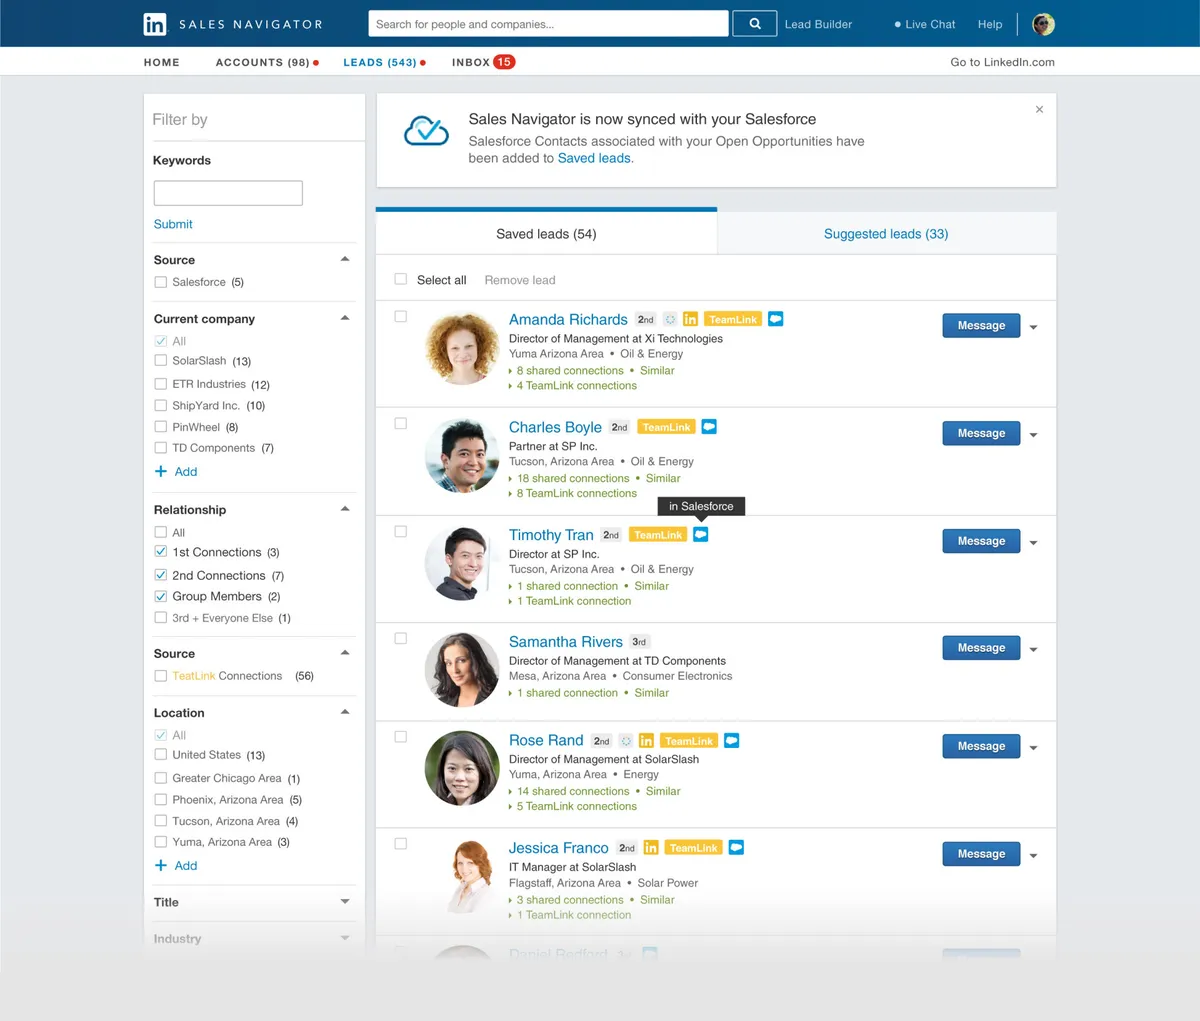 LinkedIn Sales Navigator Features